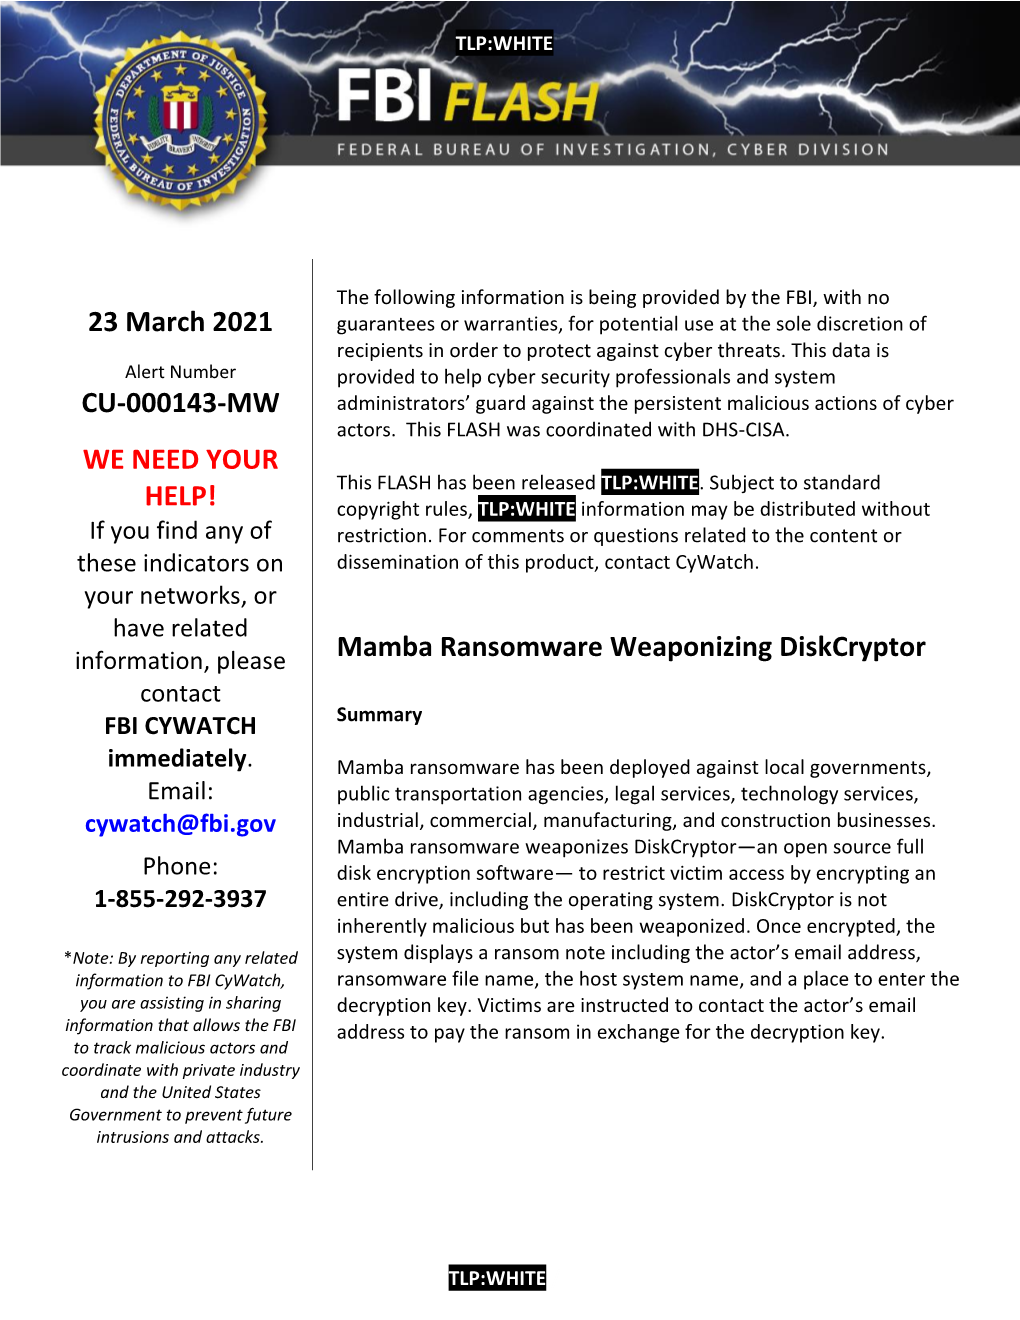 Mamba Ransomware Weaponizing Diskcryptor Contact FBI CYWATCH Summary